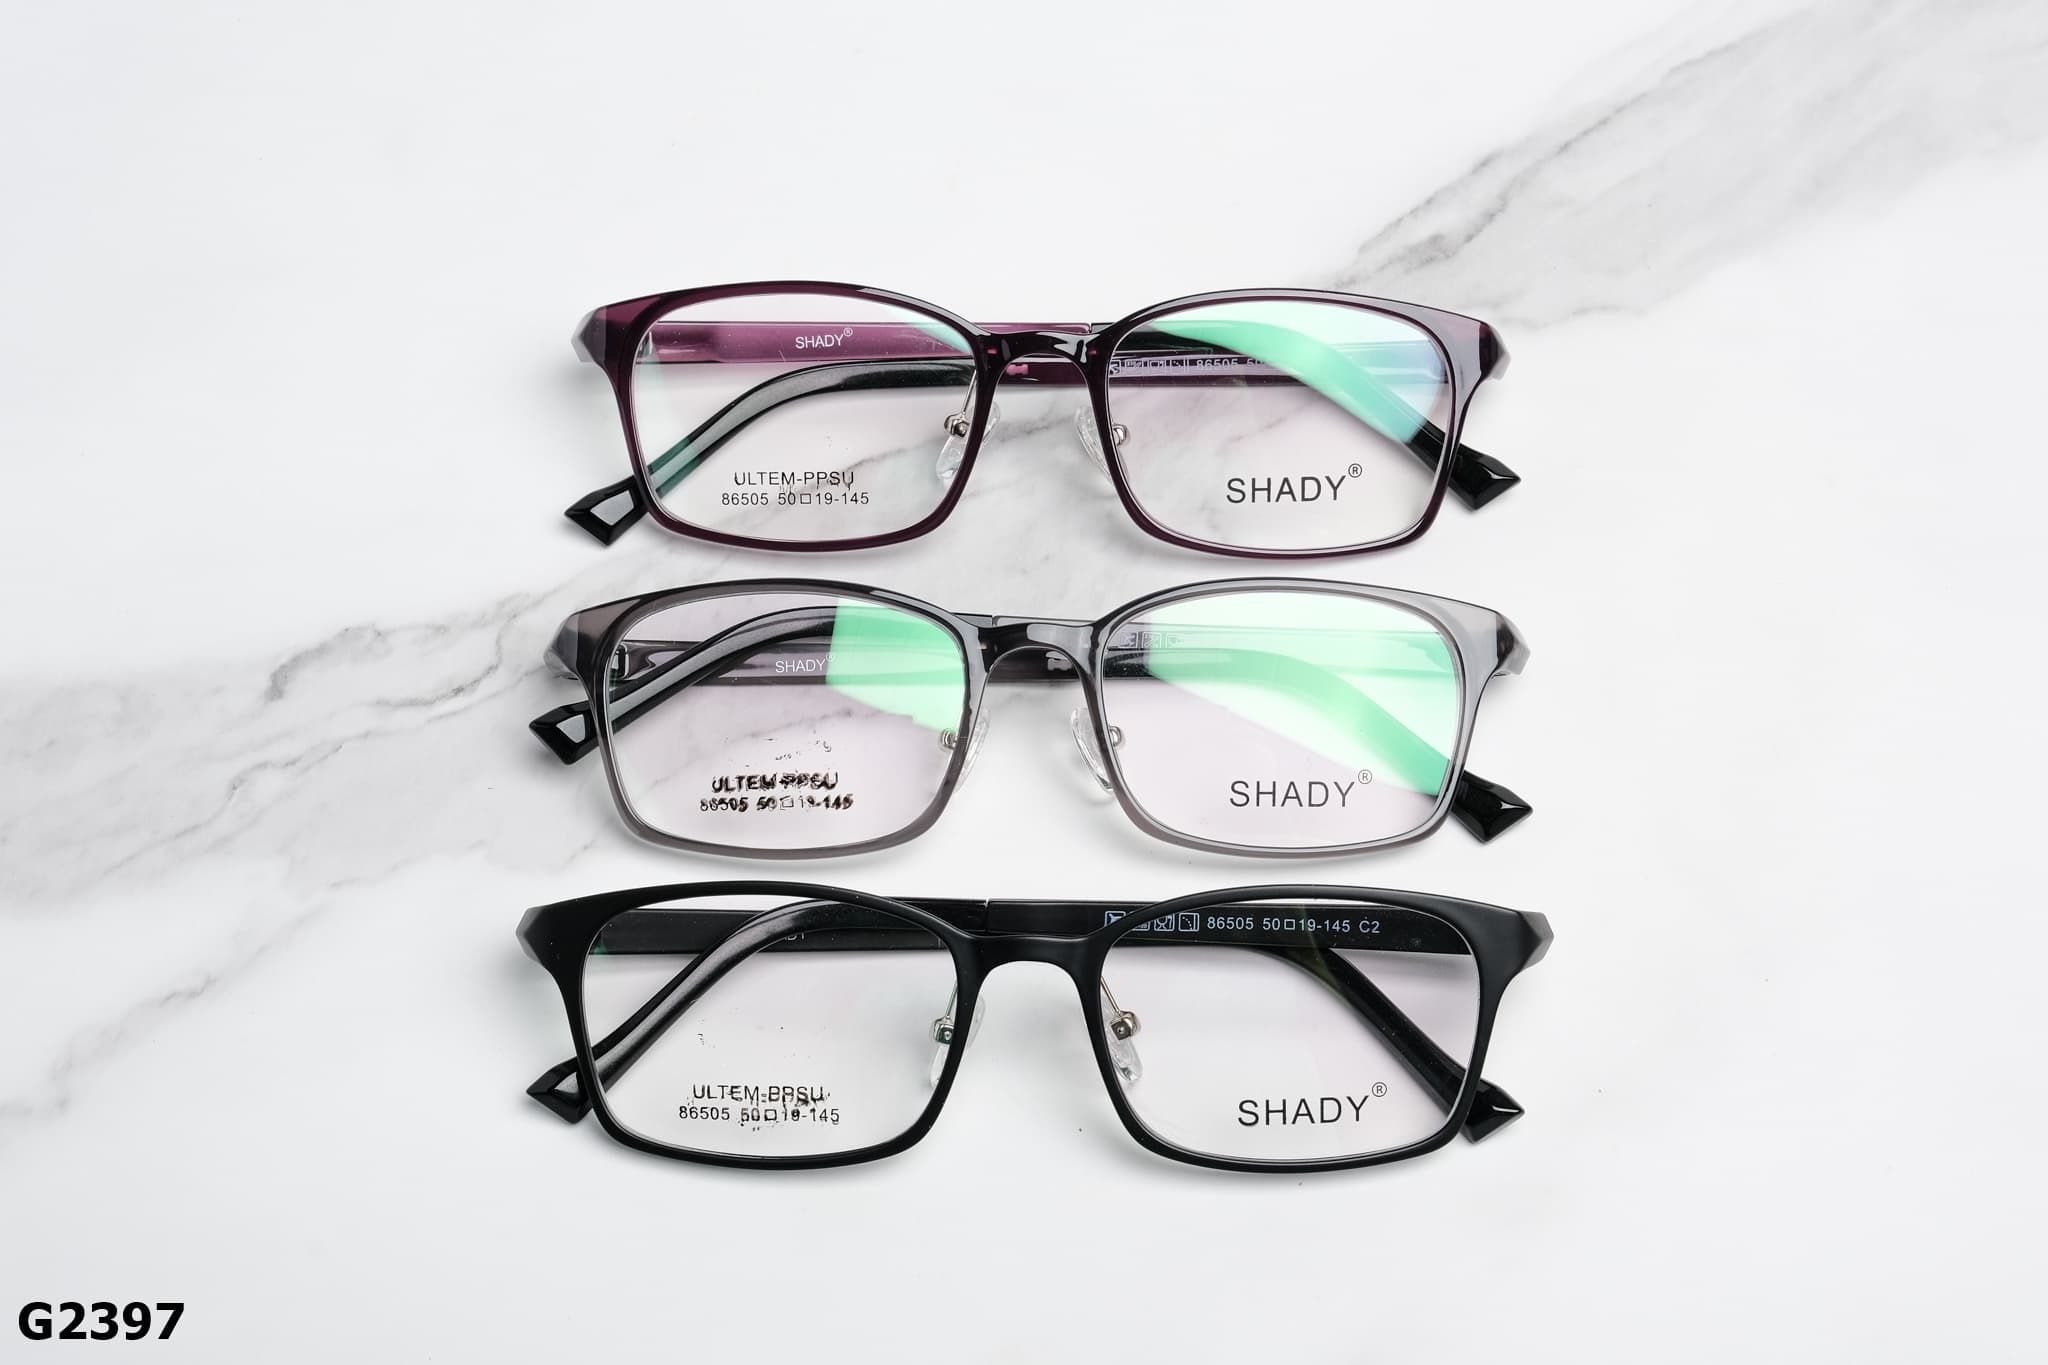  SHADY Eyewear - Glasses - G2397 